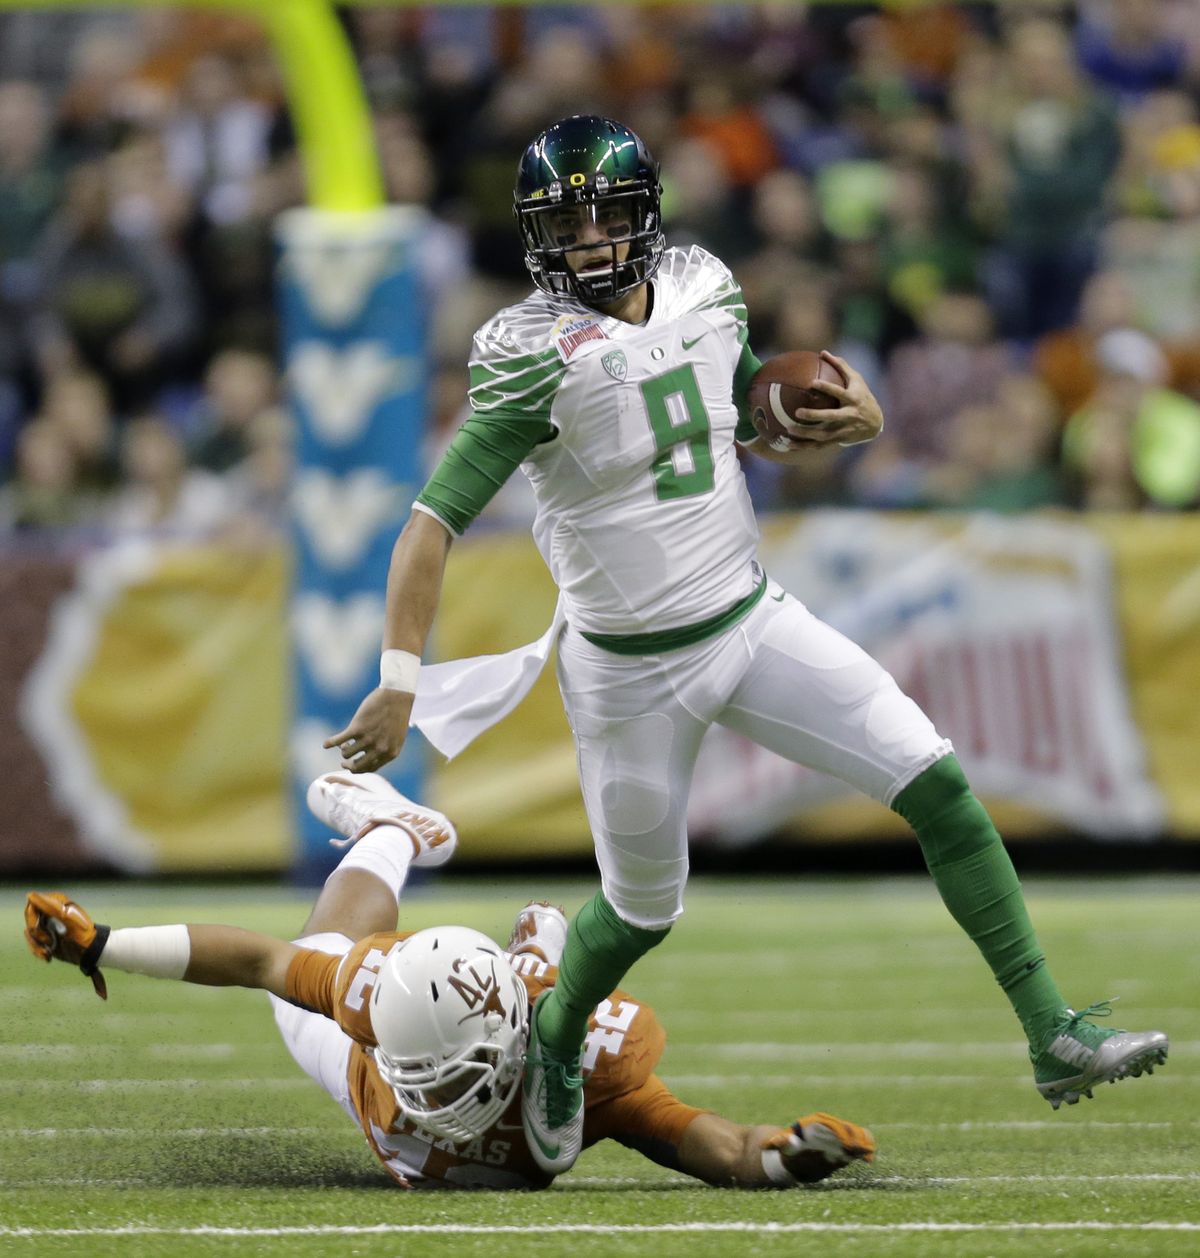 Oregon junior quarterback Marcus Mariota ran for 133 yards on 15 carries in win over Texas. (Associated Press)